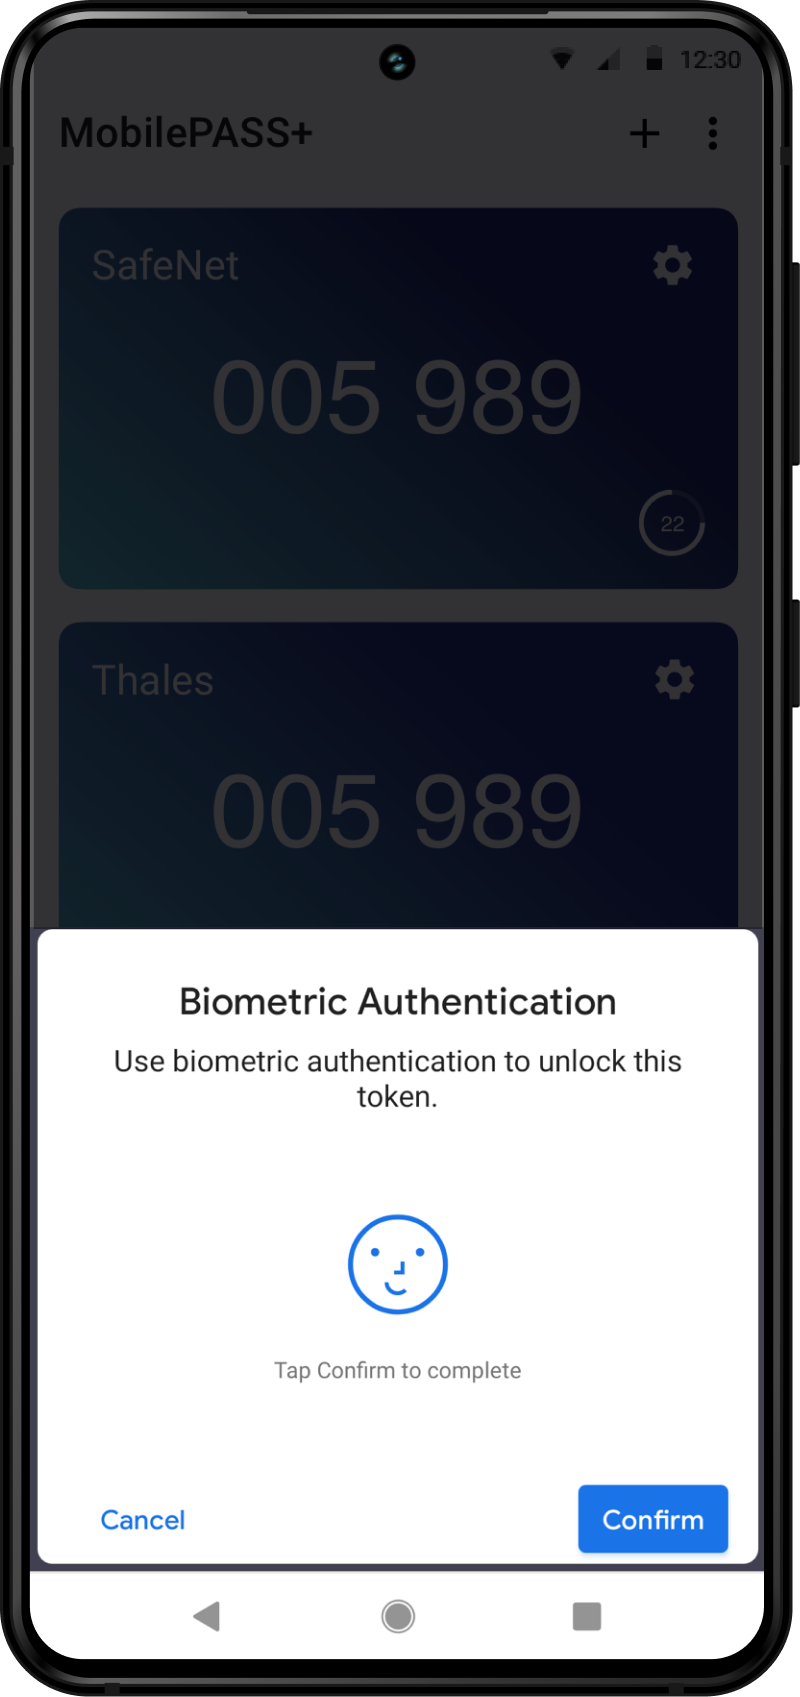 MobilePass+ Biometric Authentication